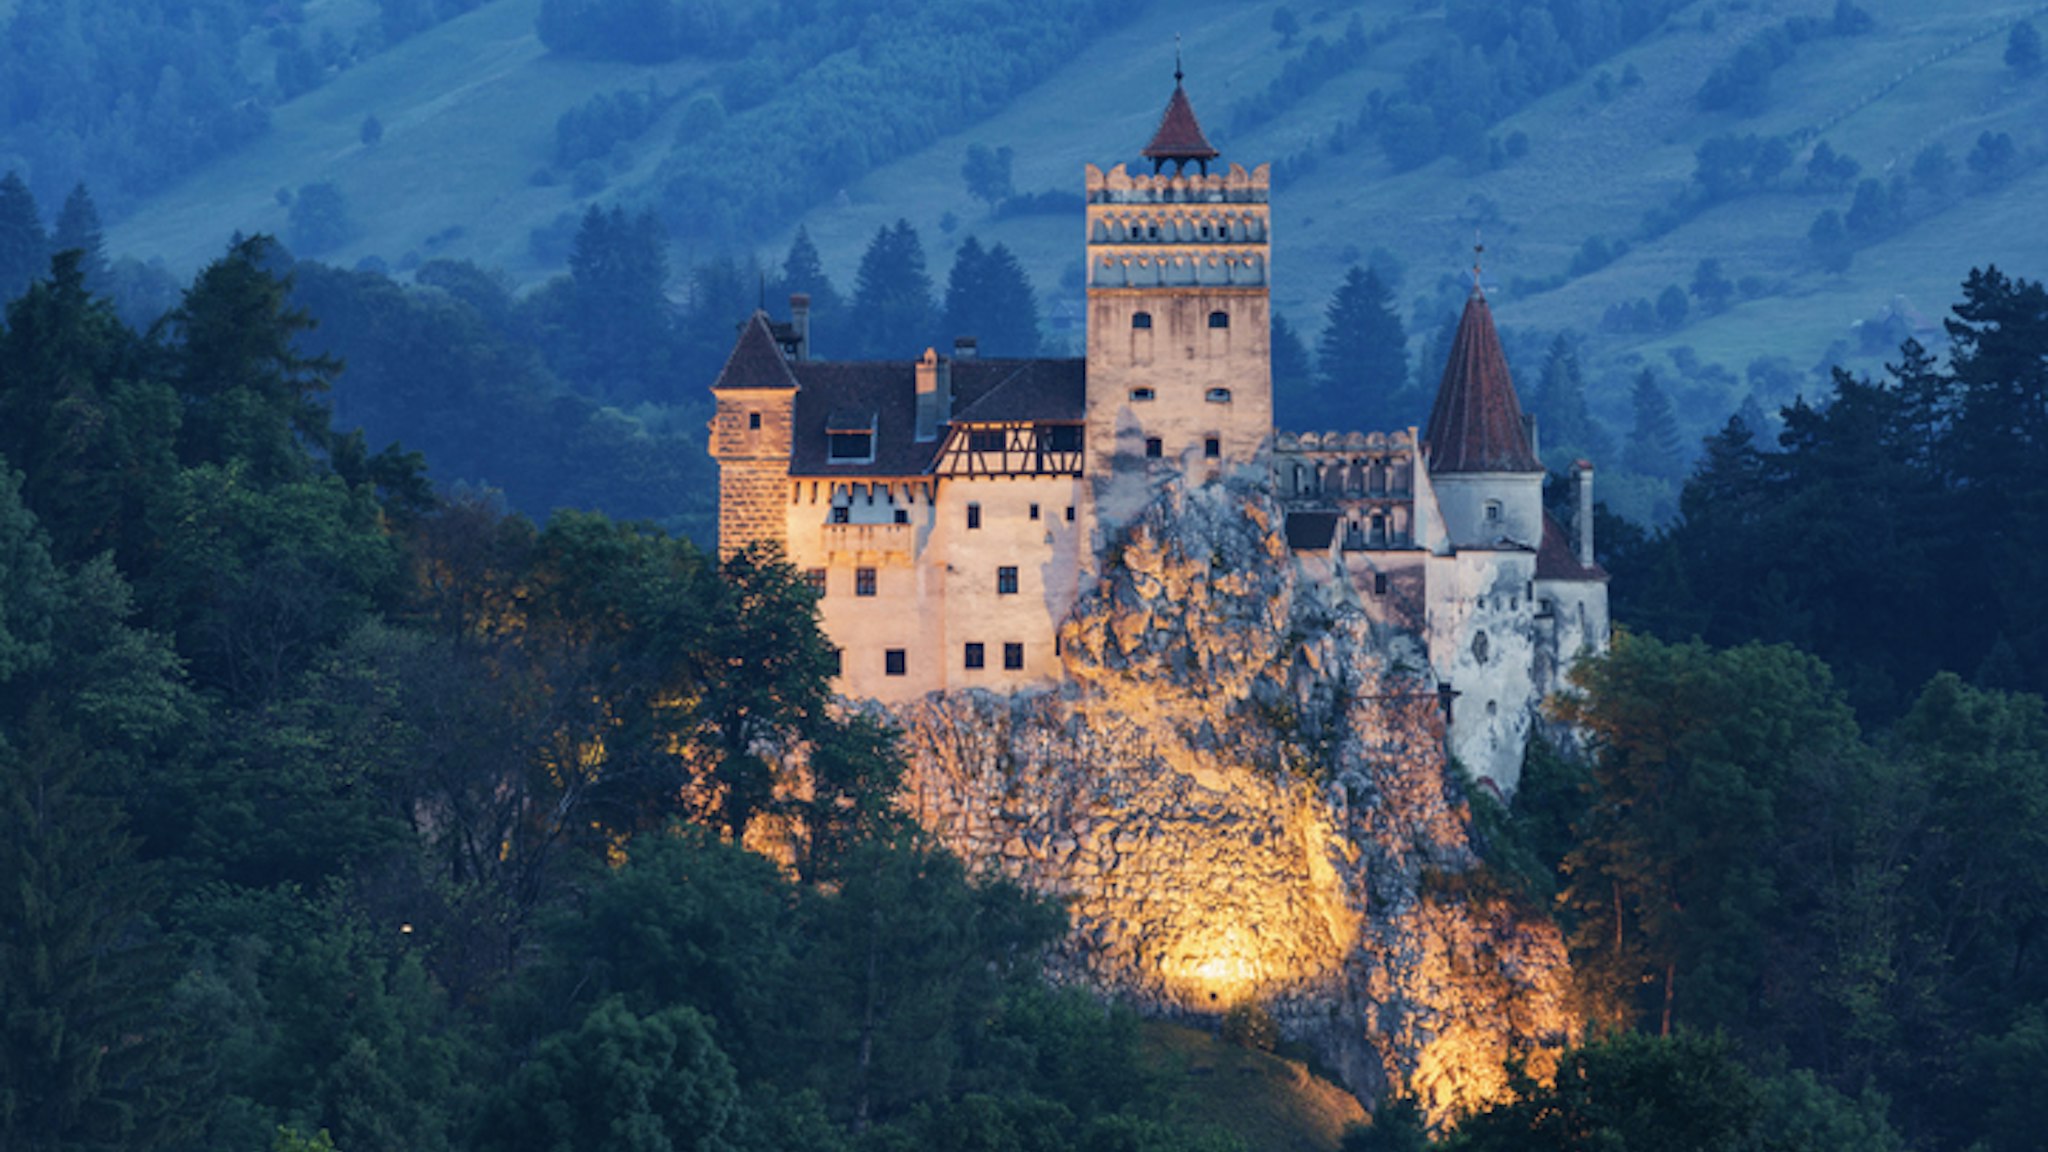 "Illuminated castle on hill, Bran, Transylvania, Romania"